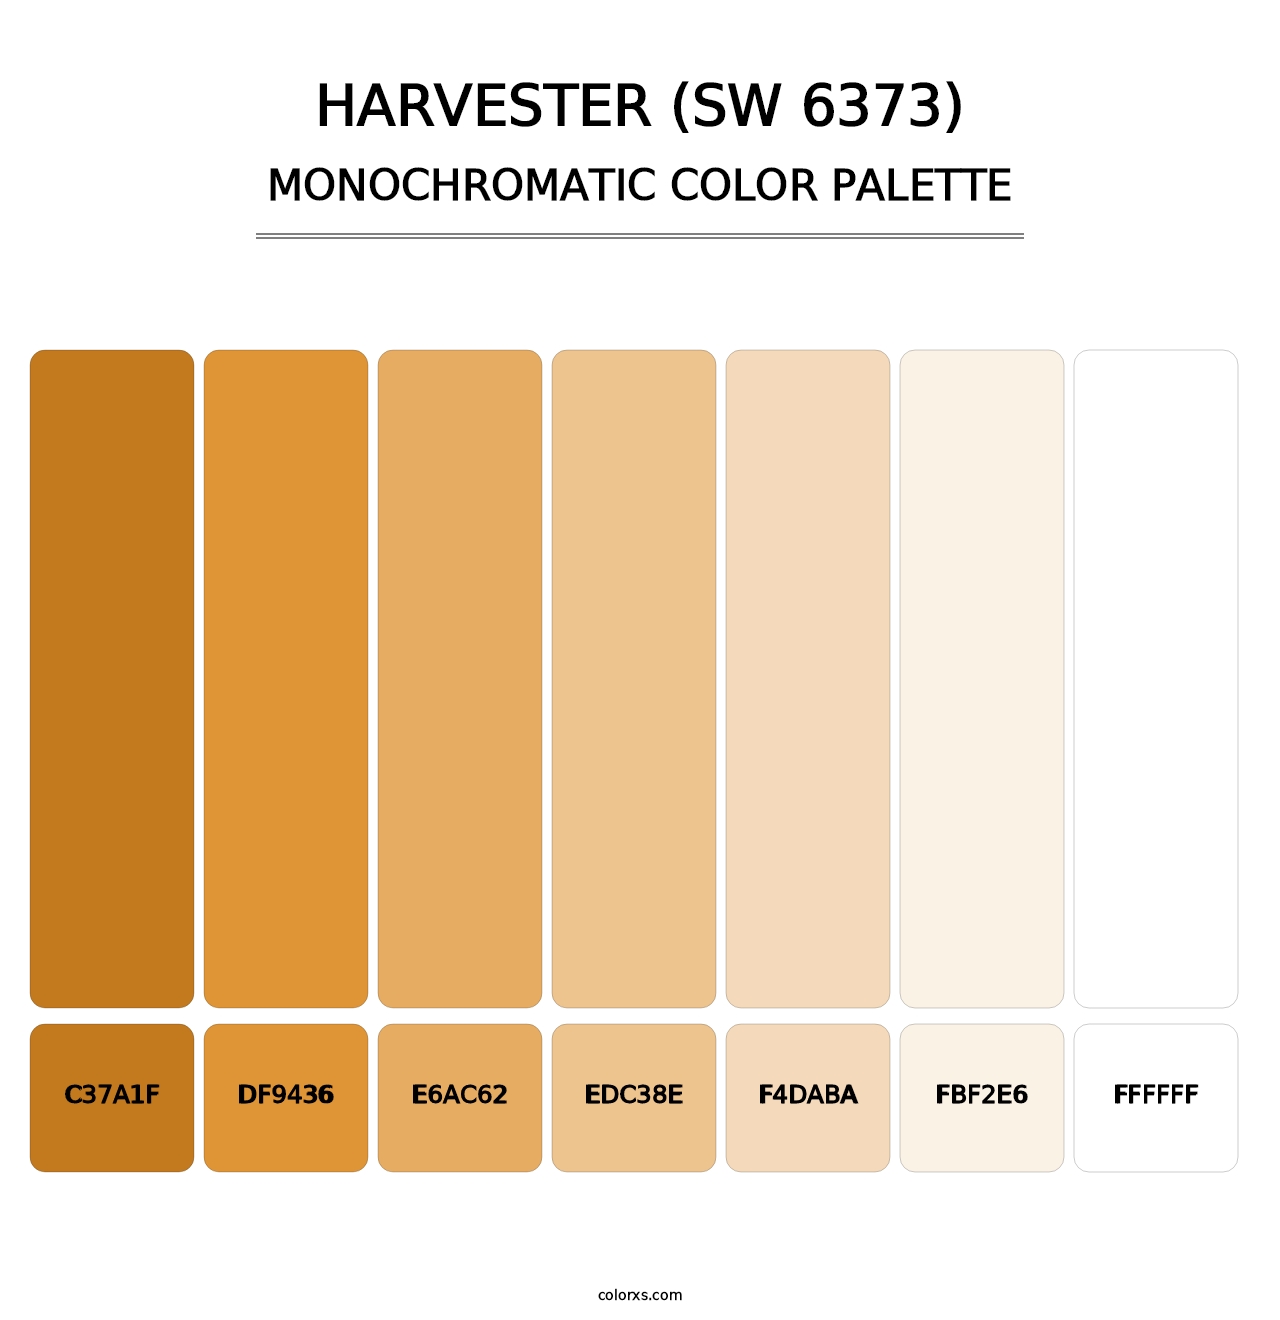 Harvester (SW 6373) - Monochromatic Color Palette